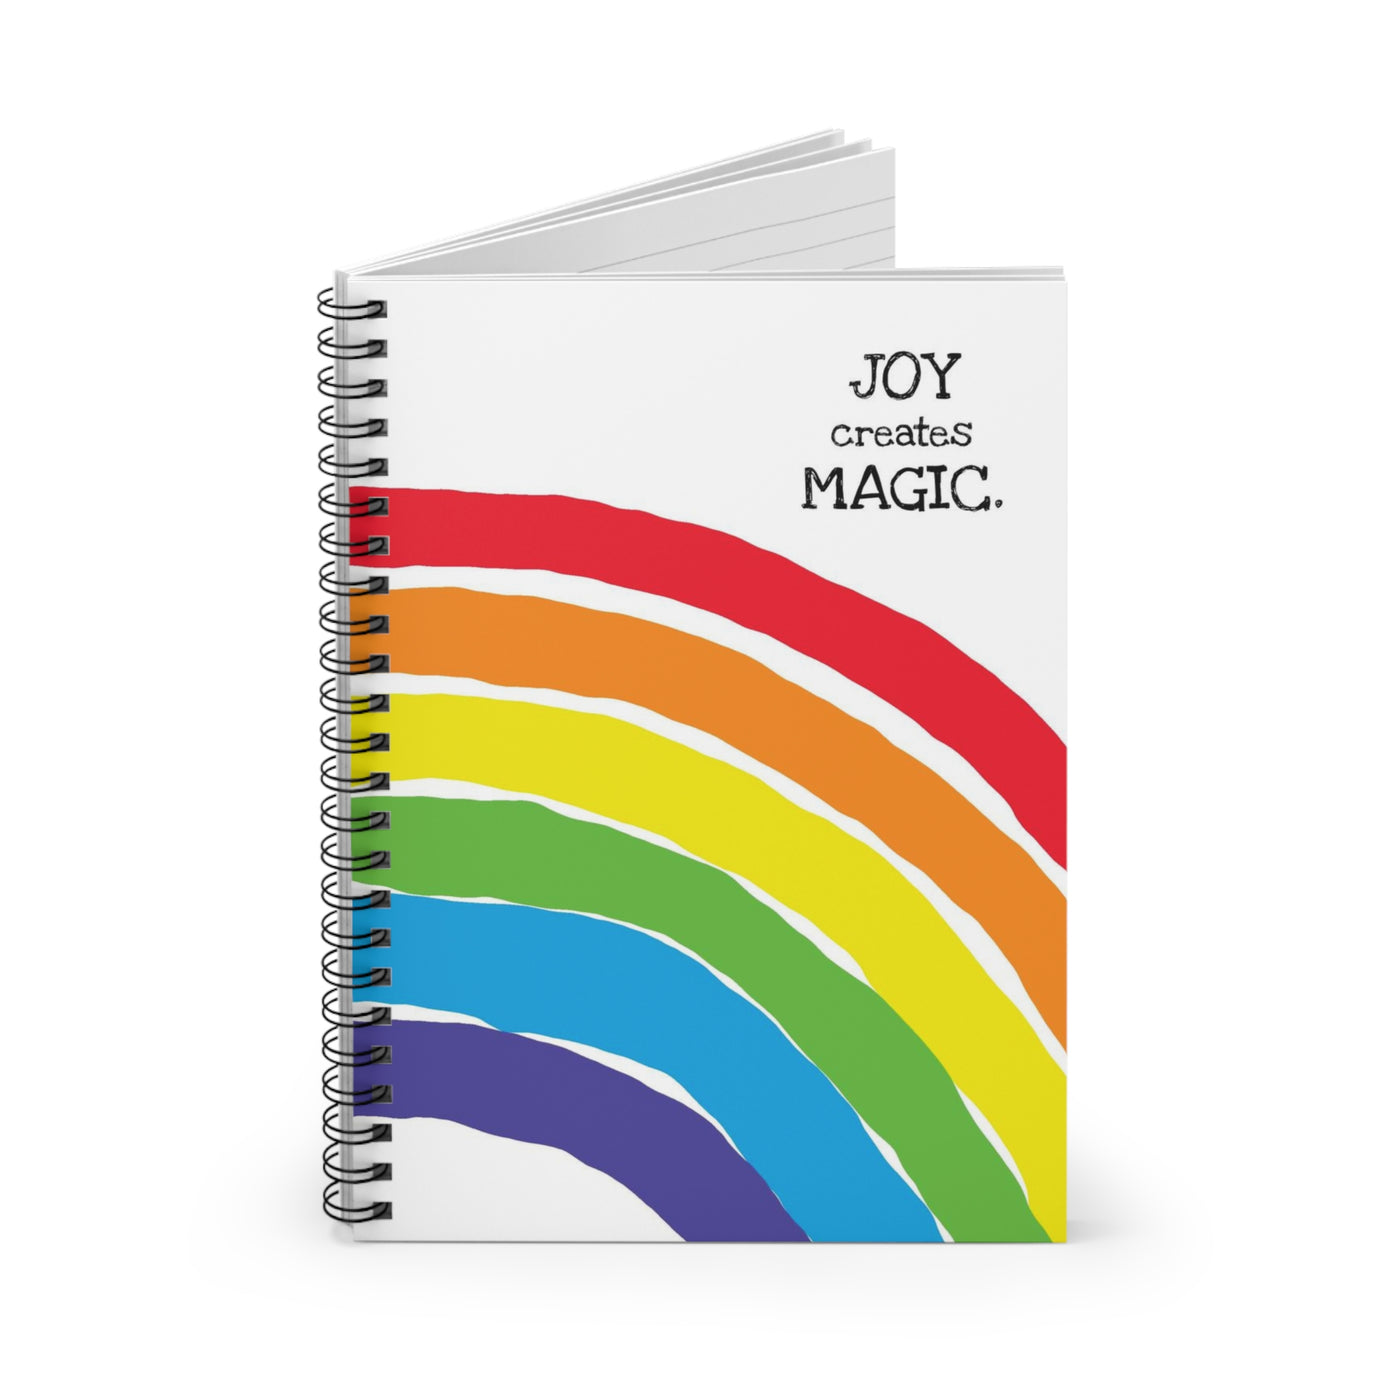 Joy Creates Magic Spiral Notebook - Ruled Line